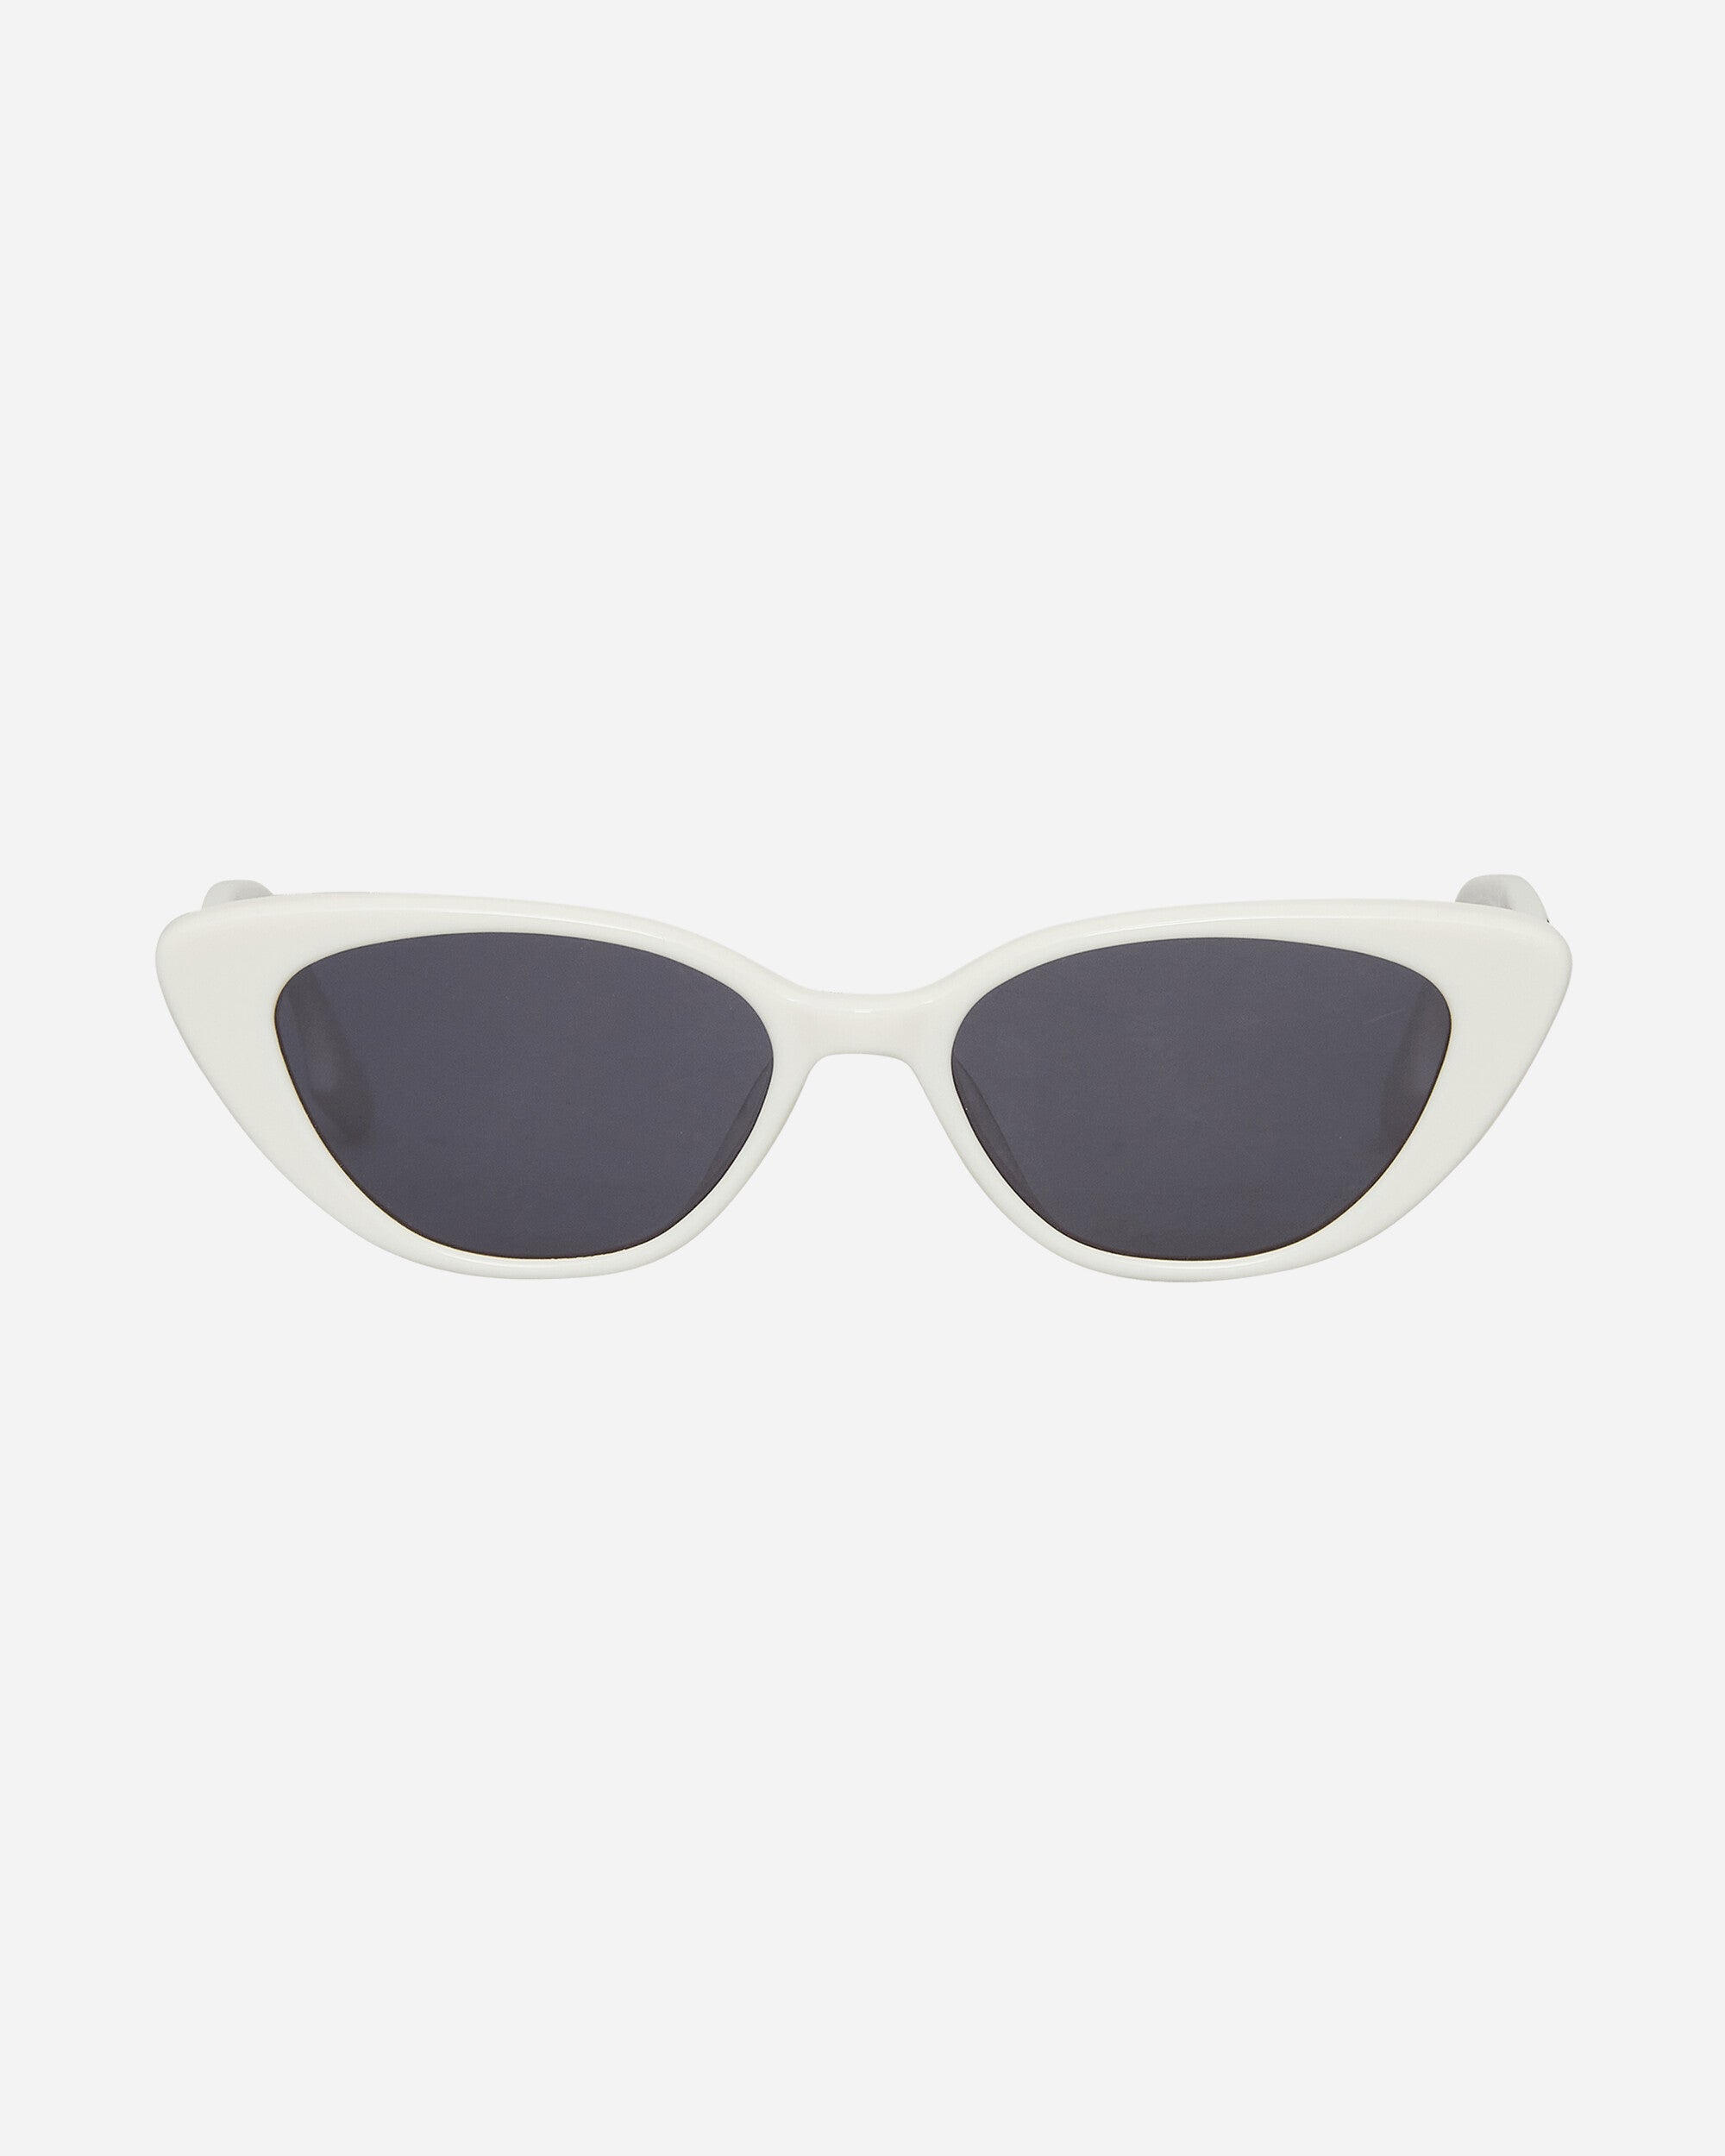 Gentle Monster Crella White Eyewear Sunglasses CRELLA-W1 W1